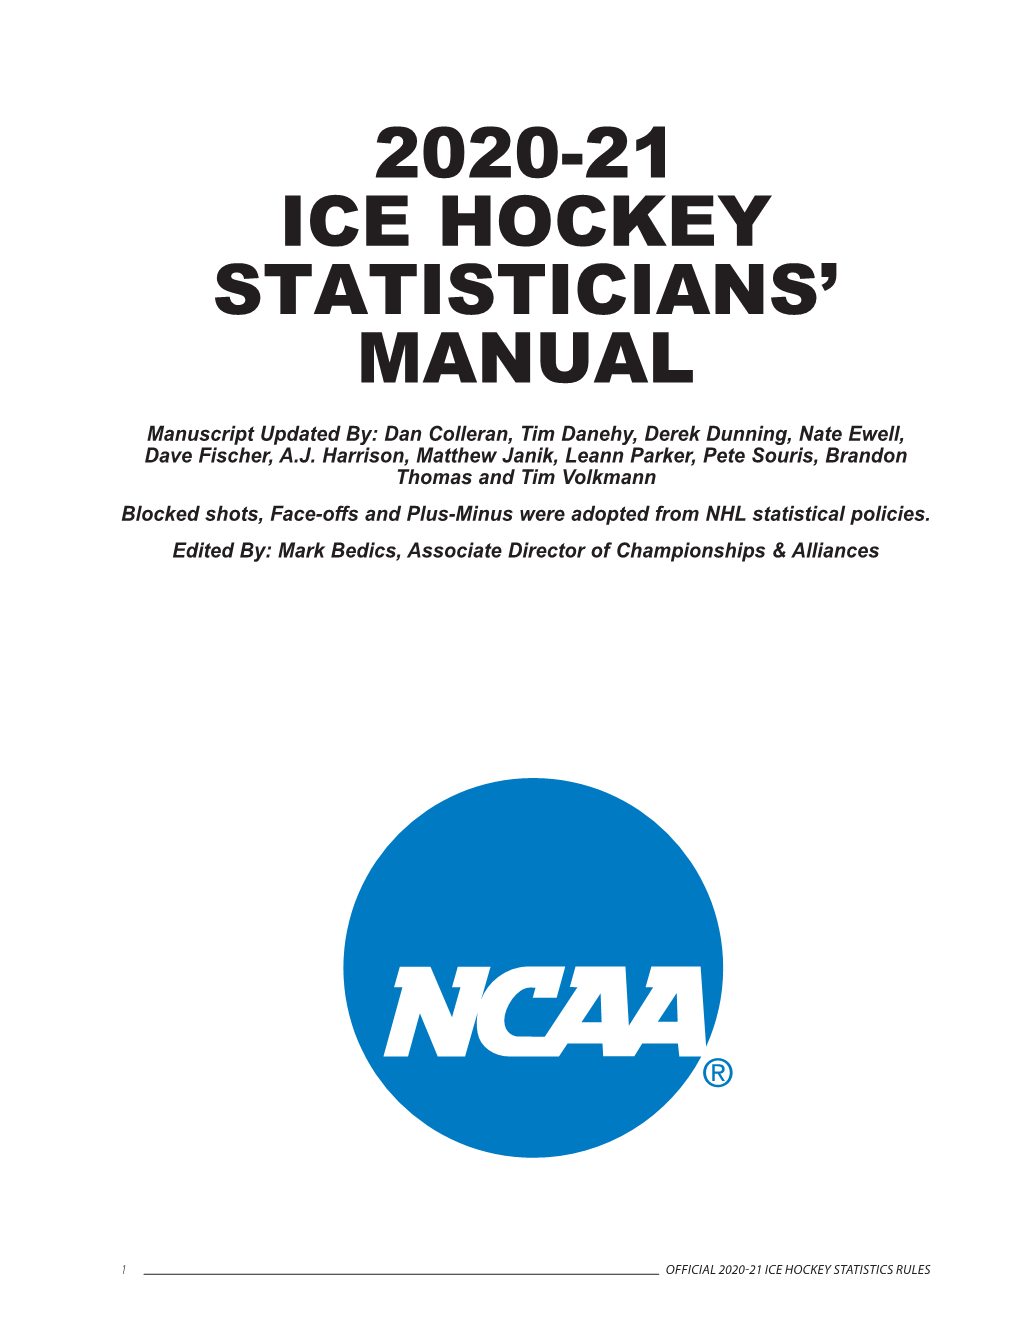 2020-21 Ice Hockey Statisticians' Manual